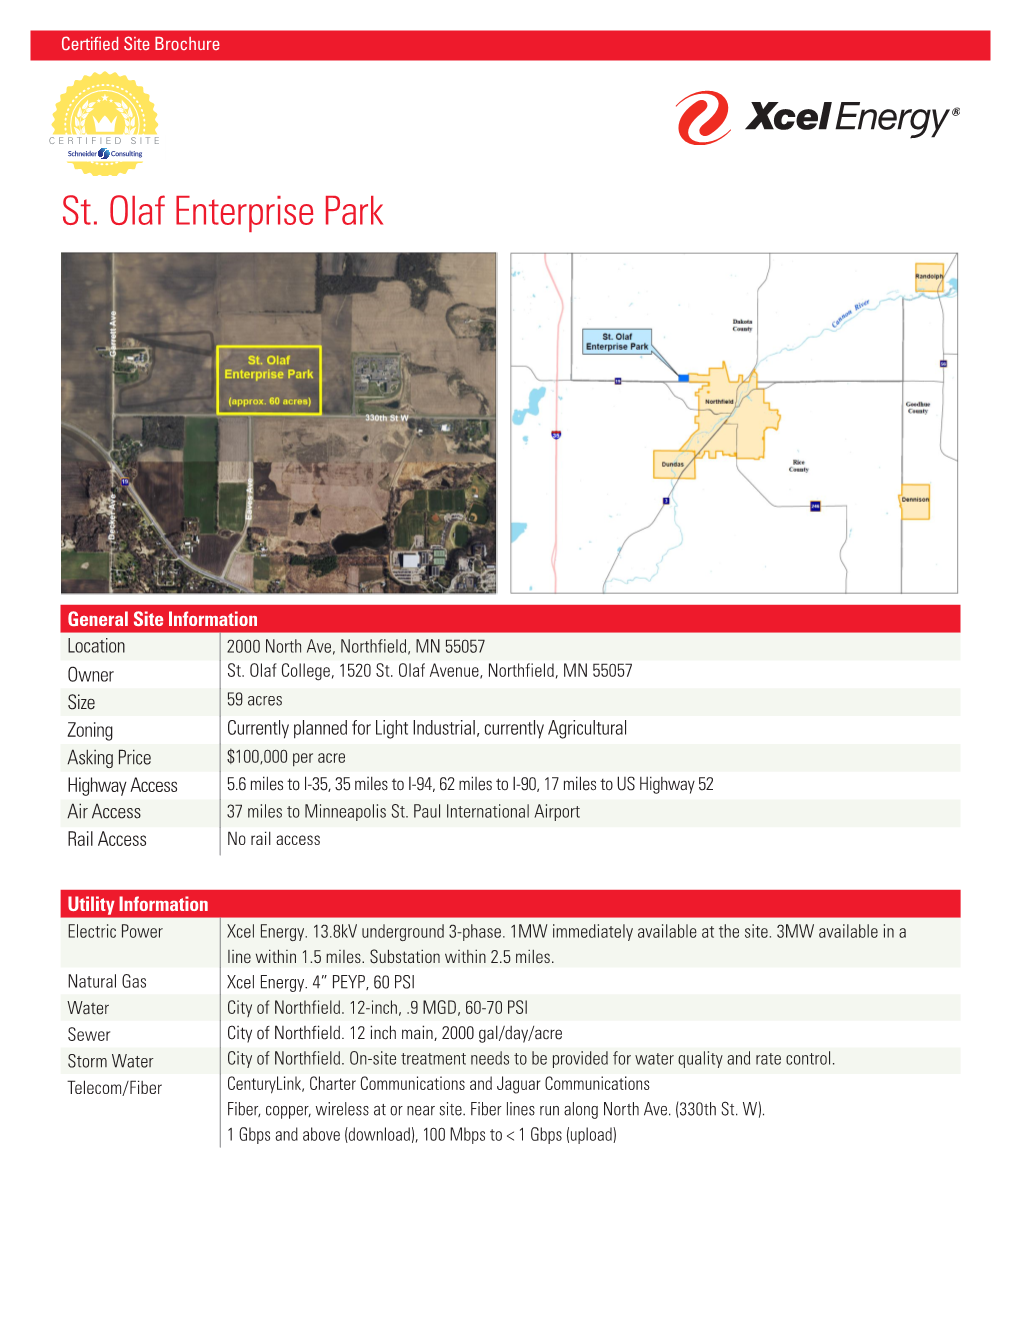 St. Olaf Enterprise Park